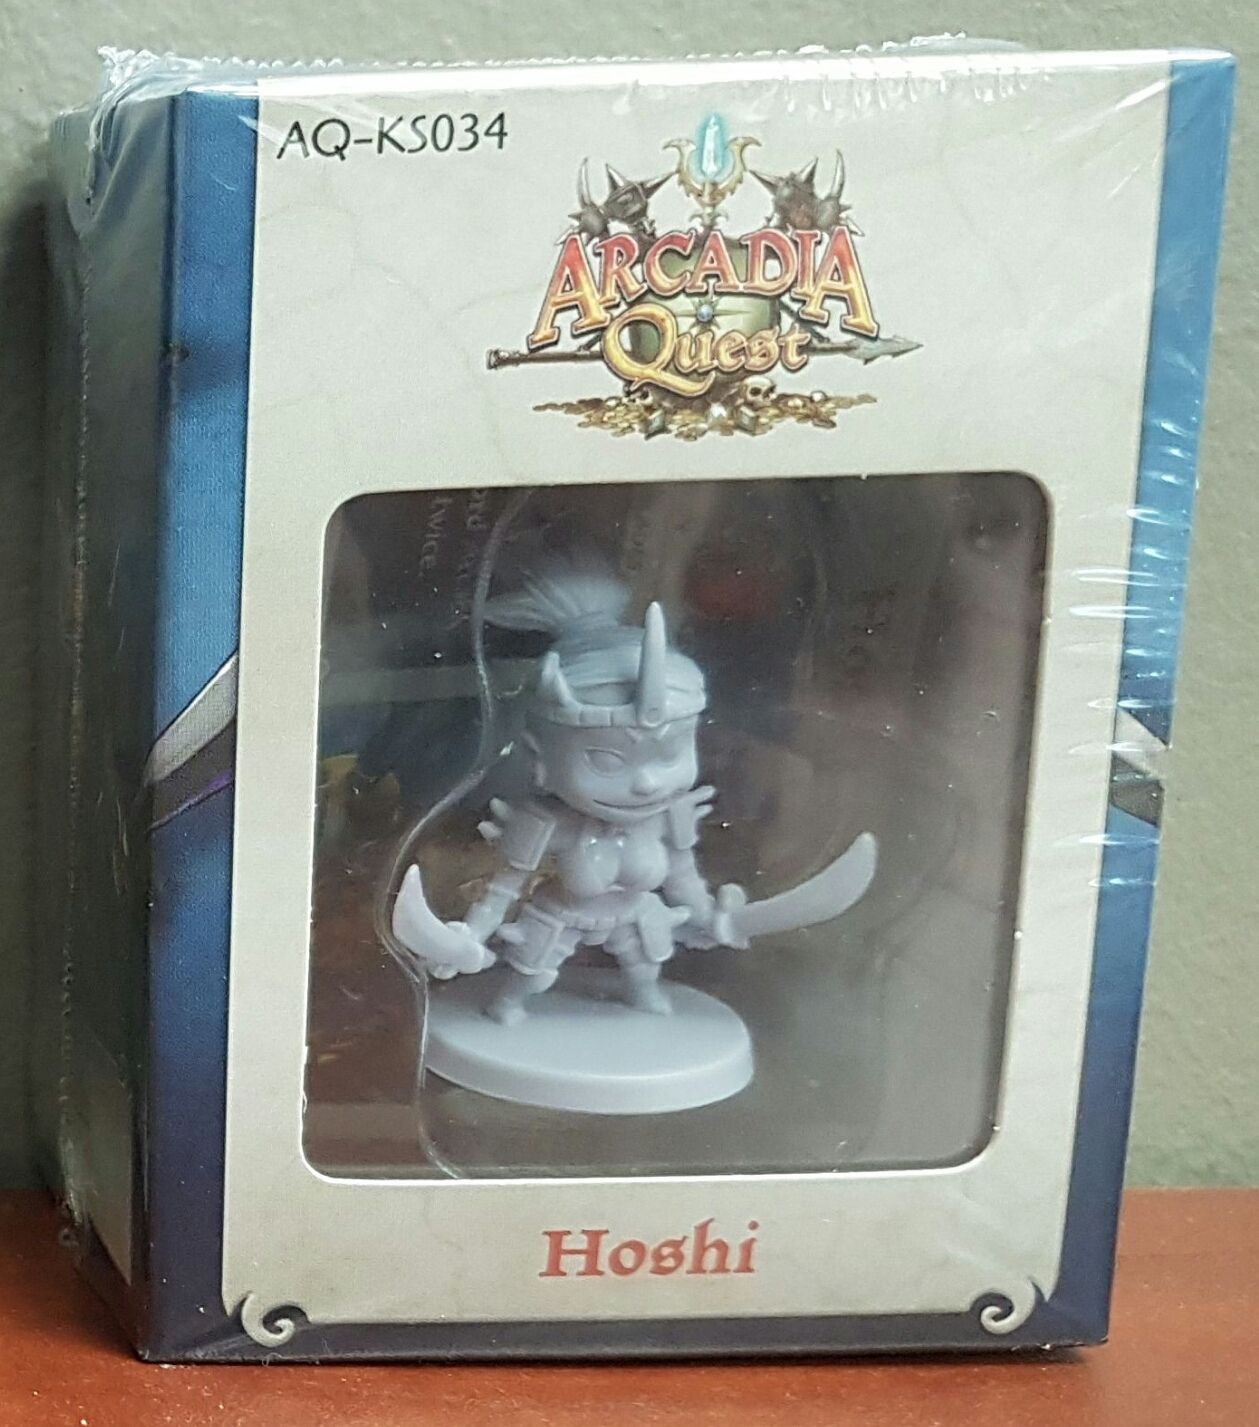 Arcadia Quest: Hoshi